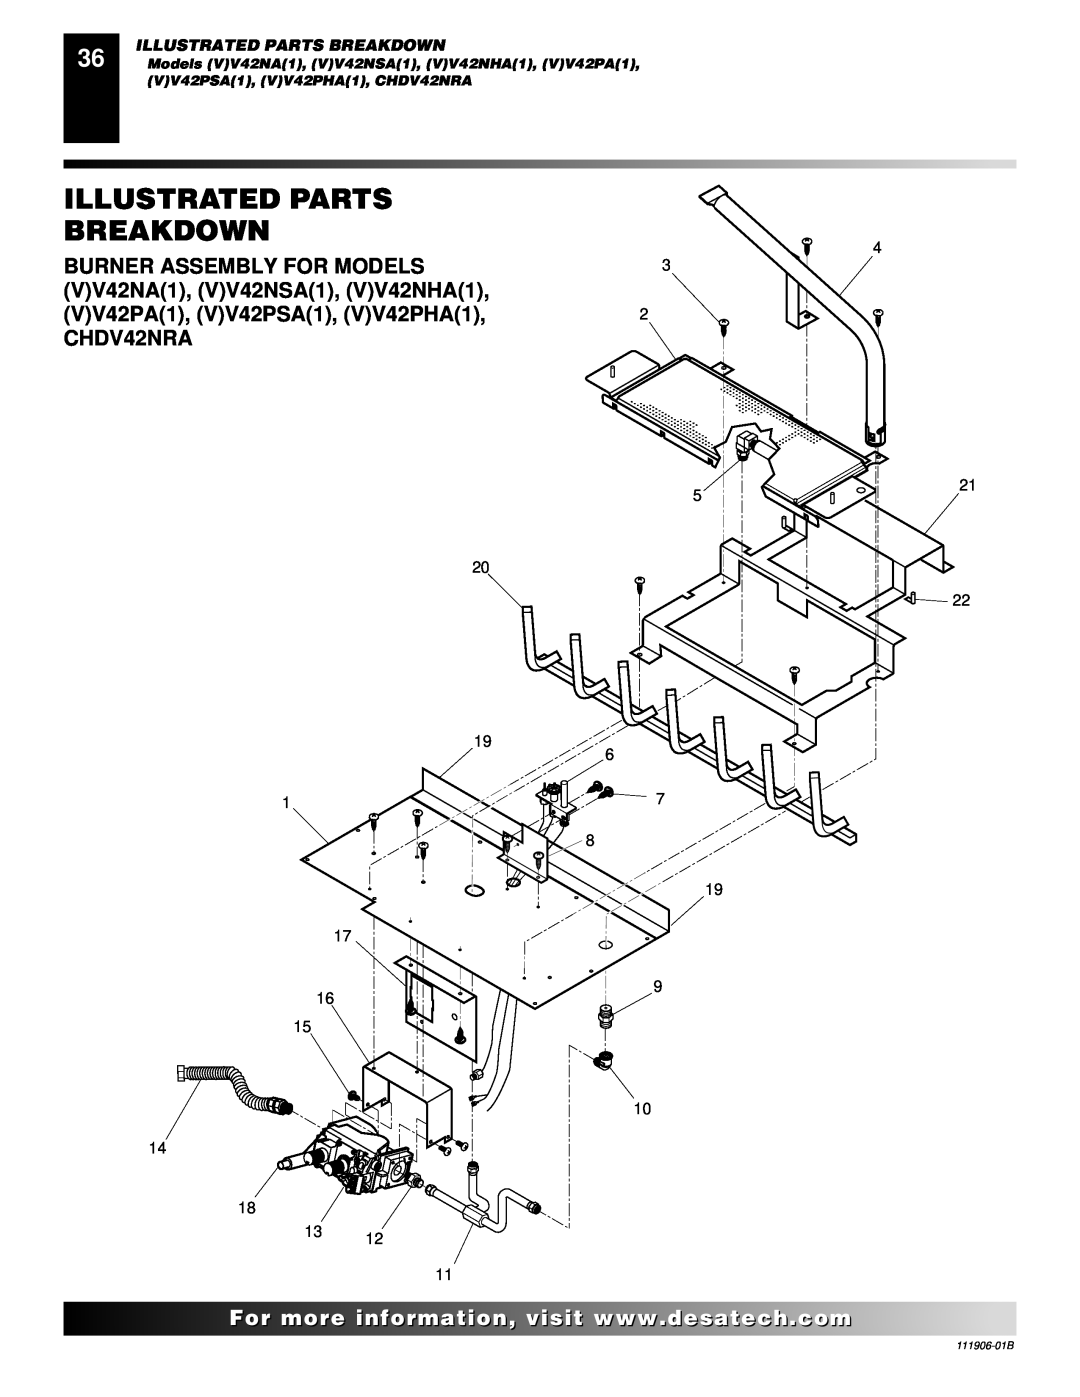 Desa (V)V42PA(1), CHDV42NRA installation manual Illustrated Parts Breakdown, 111906-01B 